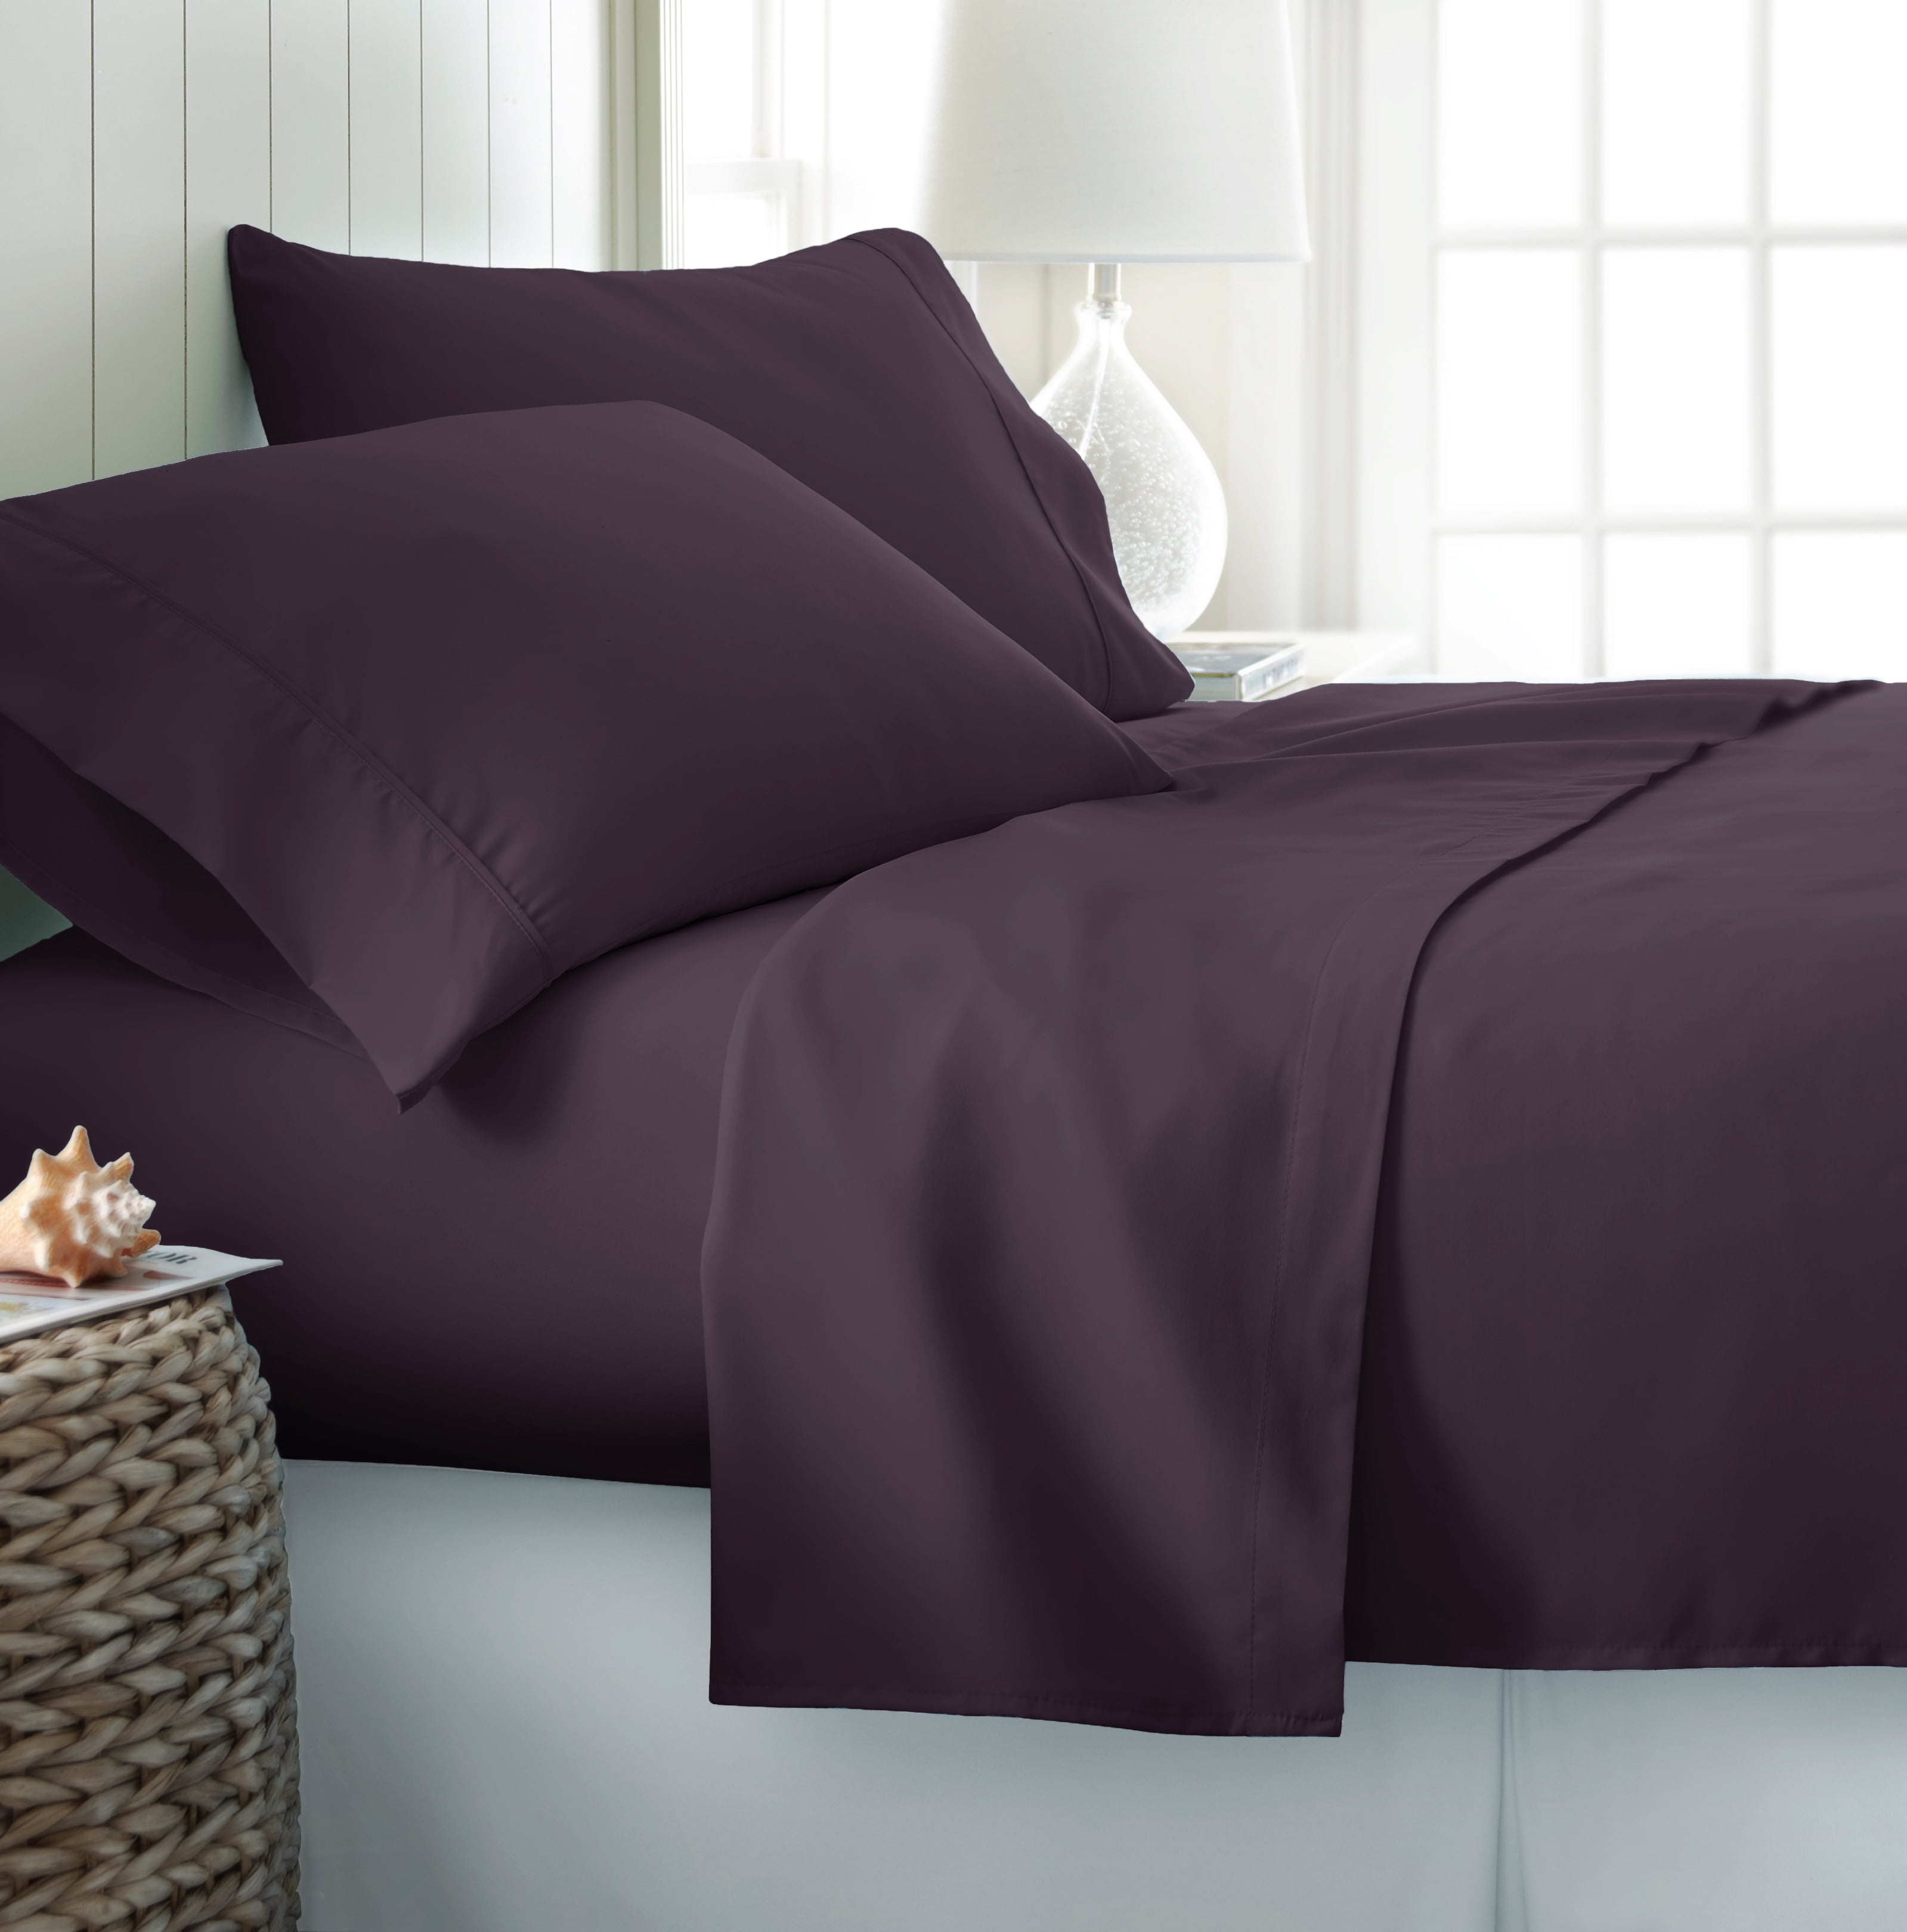 Poly Cotton Flat Sheet King Size Latte Non Iron Percale King Size Flat Bed Sheet 